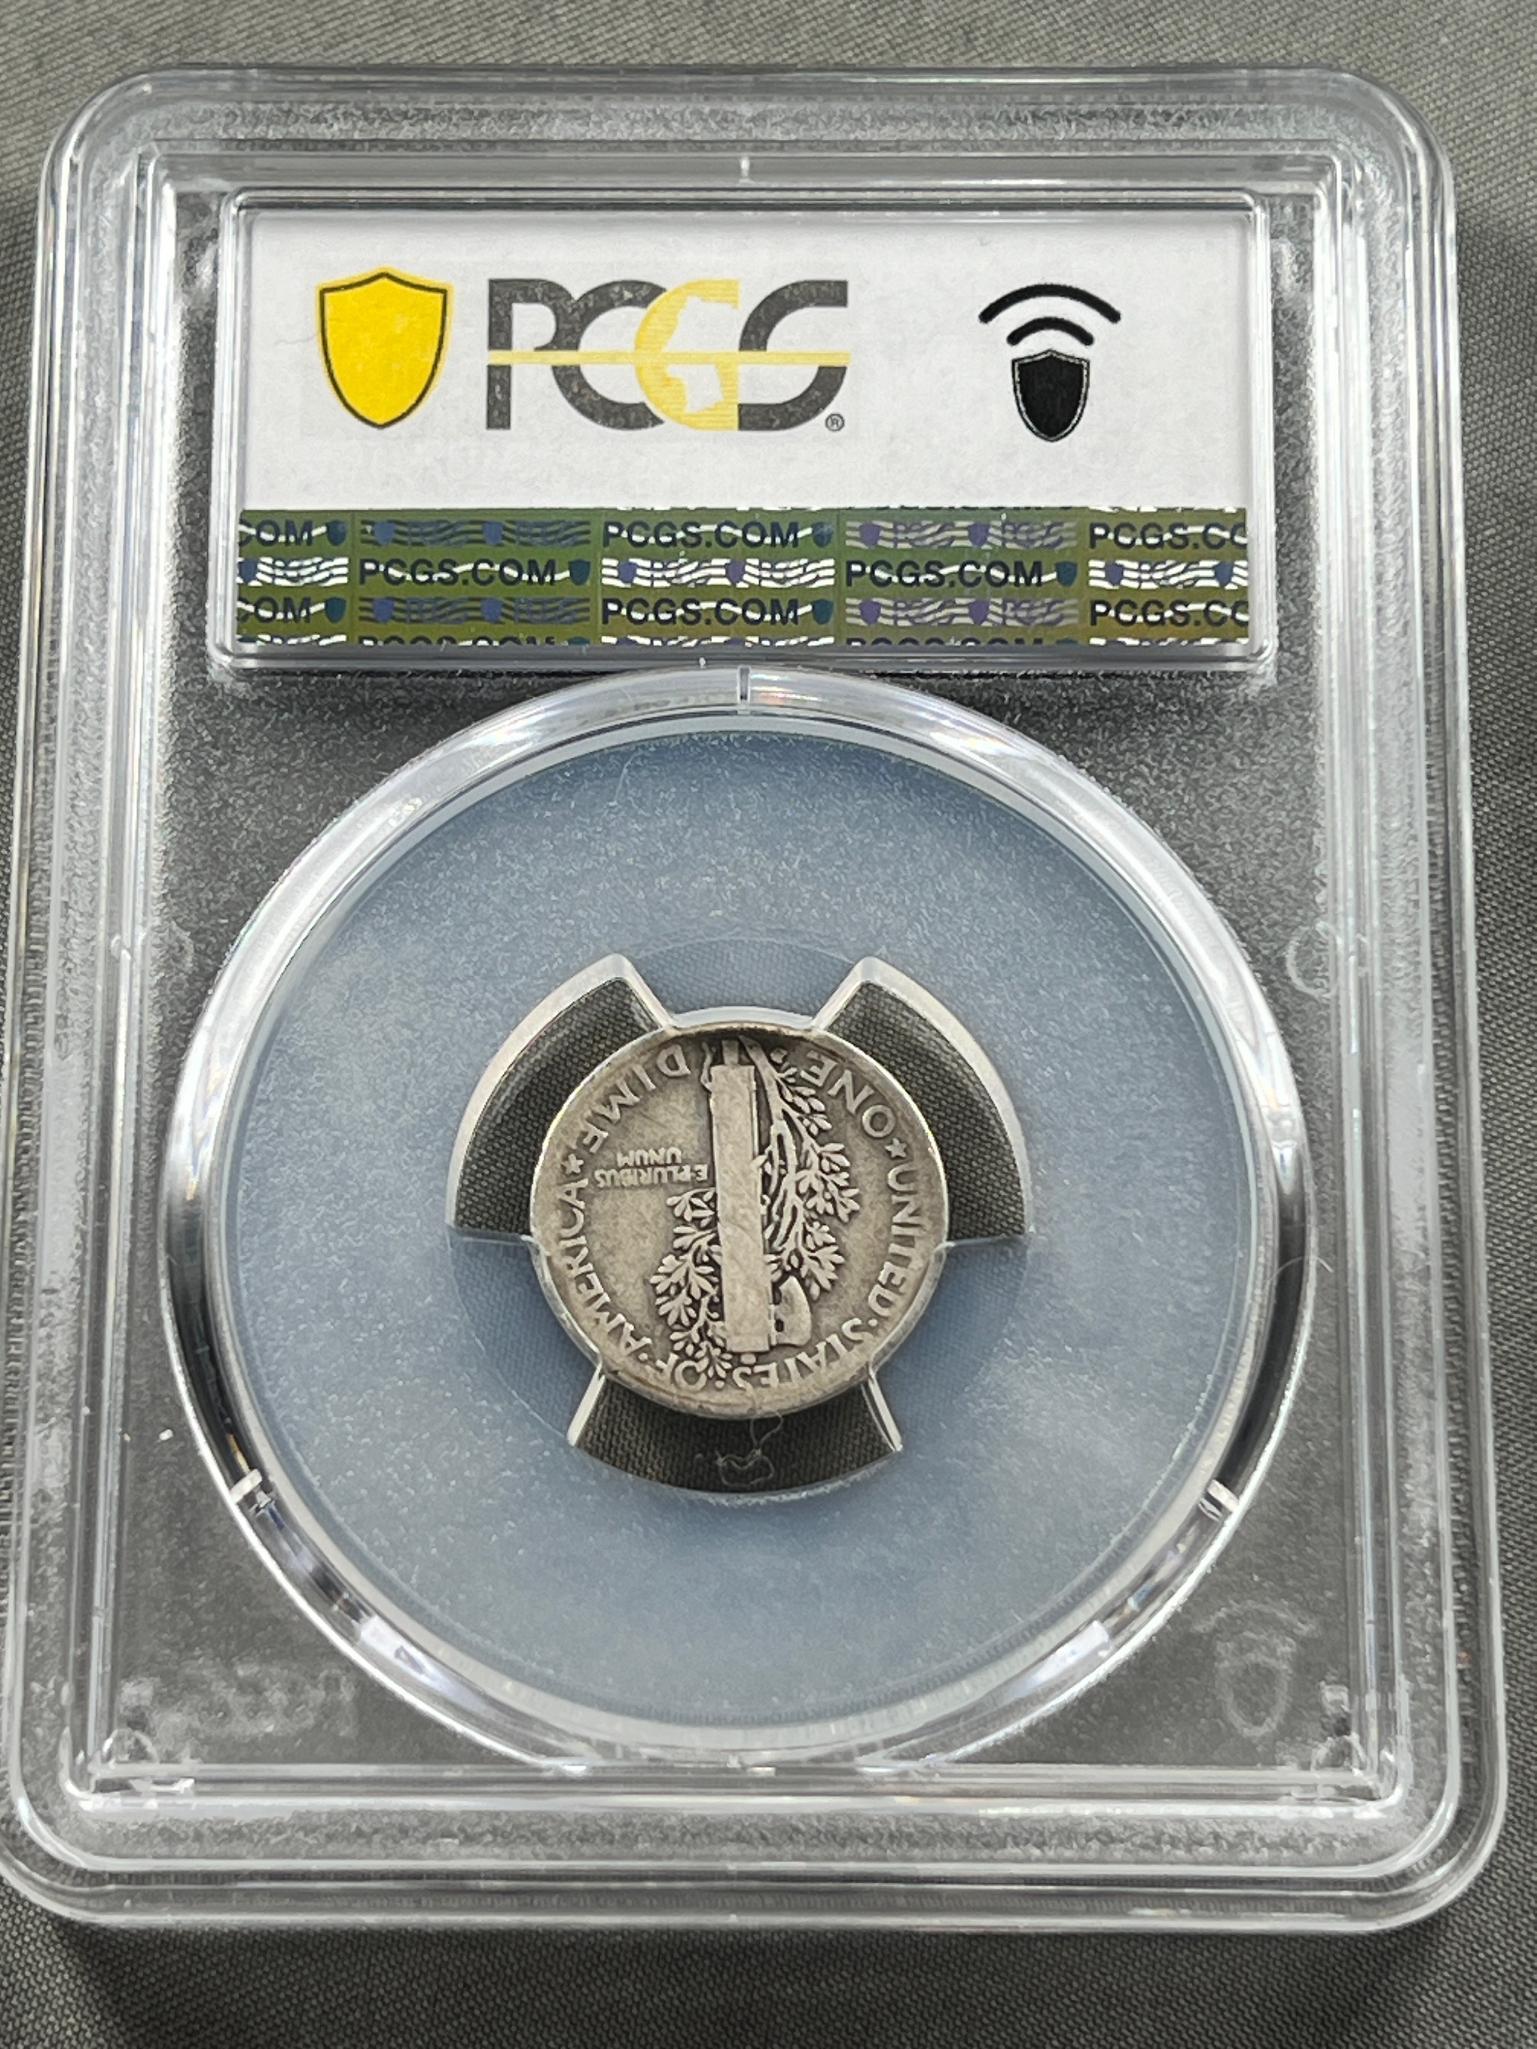 KEY DATE 1916-D Mercury Dime in PCGS G04 holder